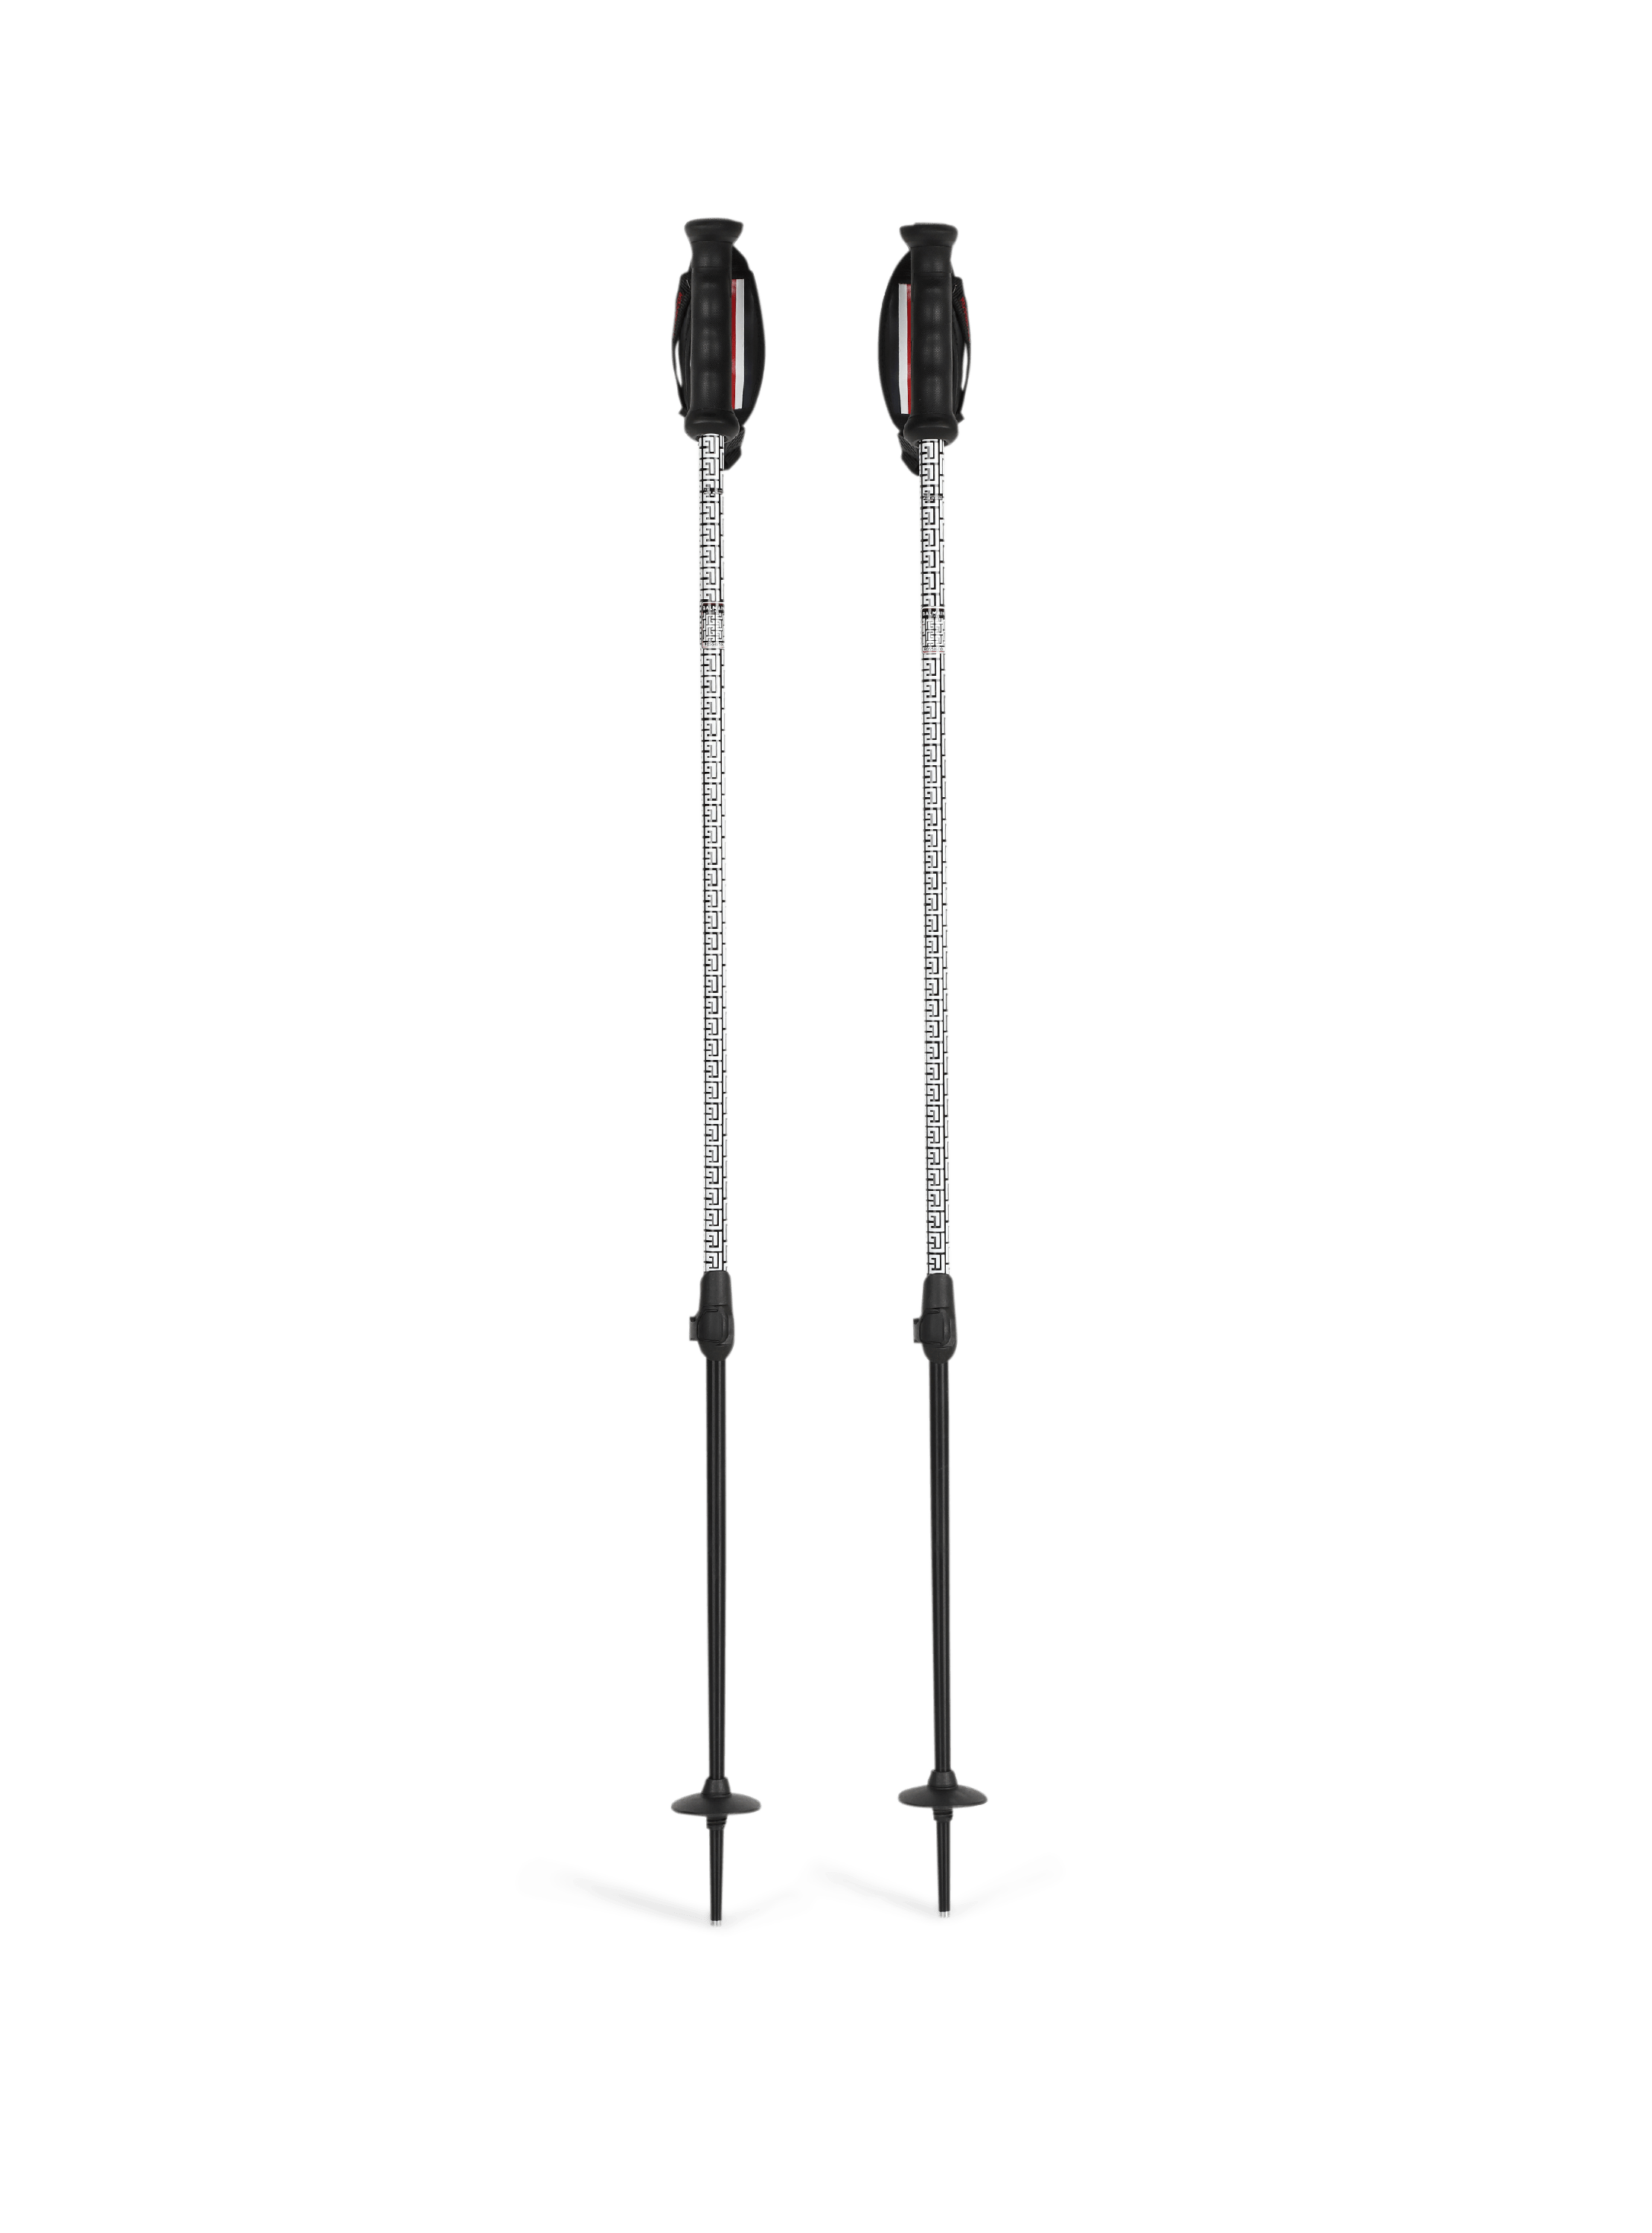 Balmain x Rossignol - Rossignol ski poles with Balmain monogram